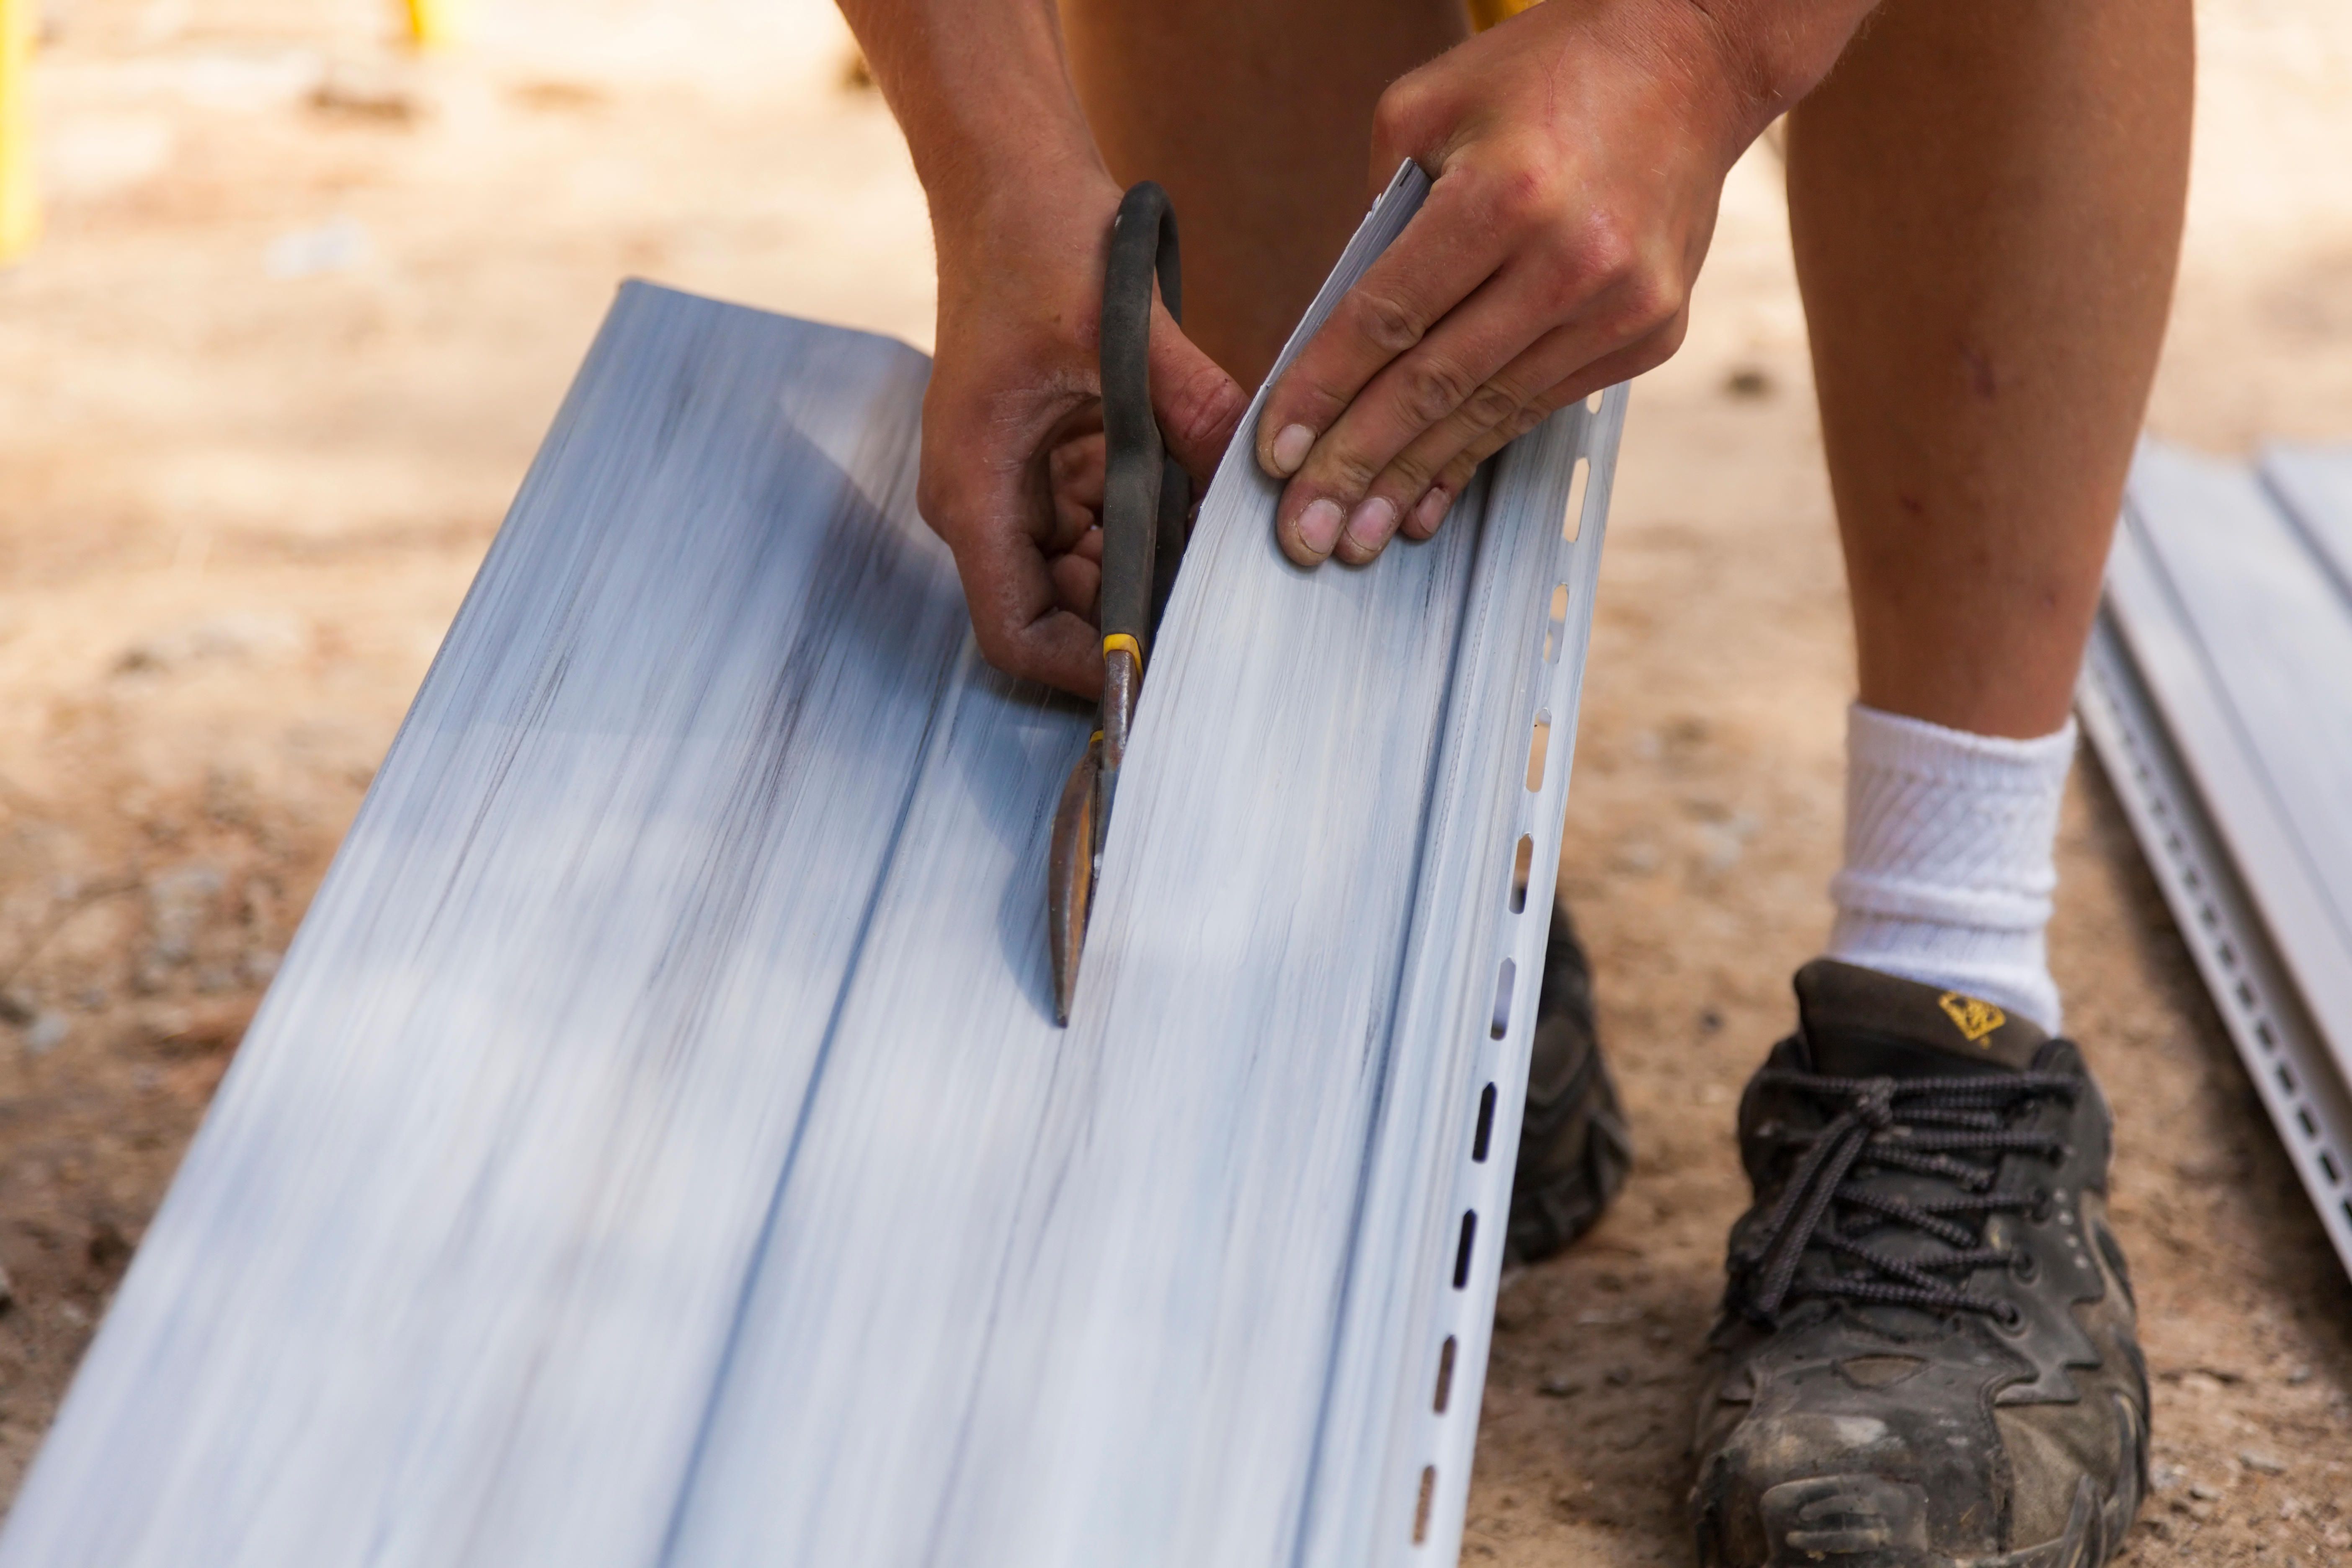 J-Roller - Buy Best Installation Tool For Wood Planks